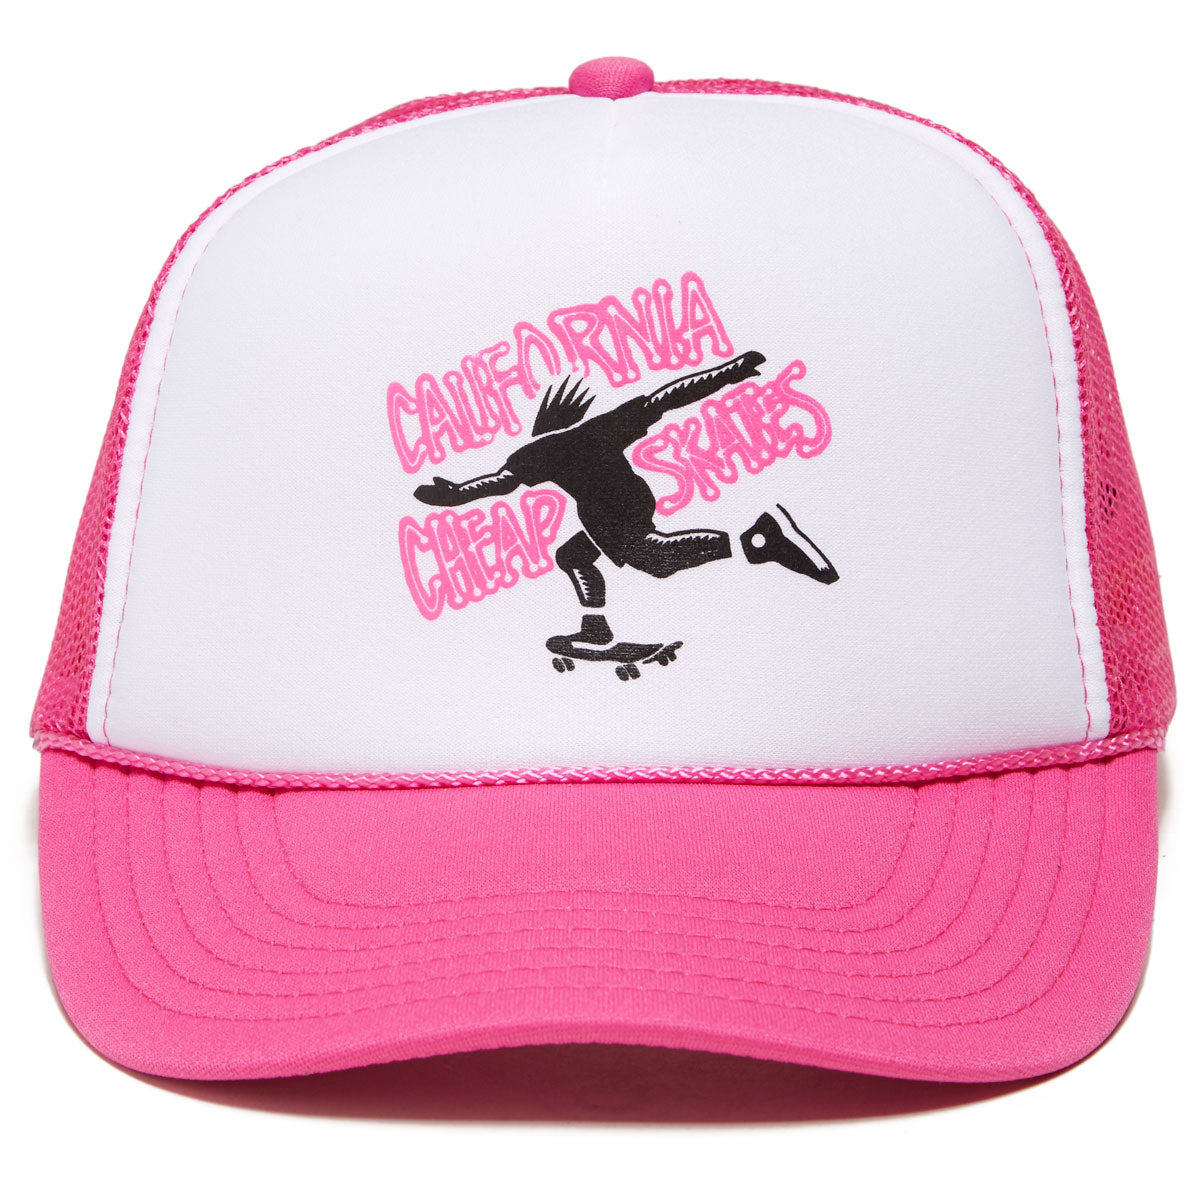 CCS Cheapskates Mesh Trucker Hat - Hot Pink/White/Black image 3